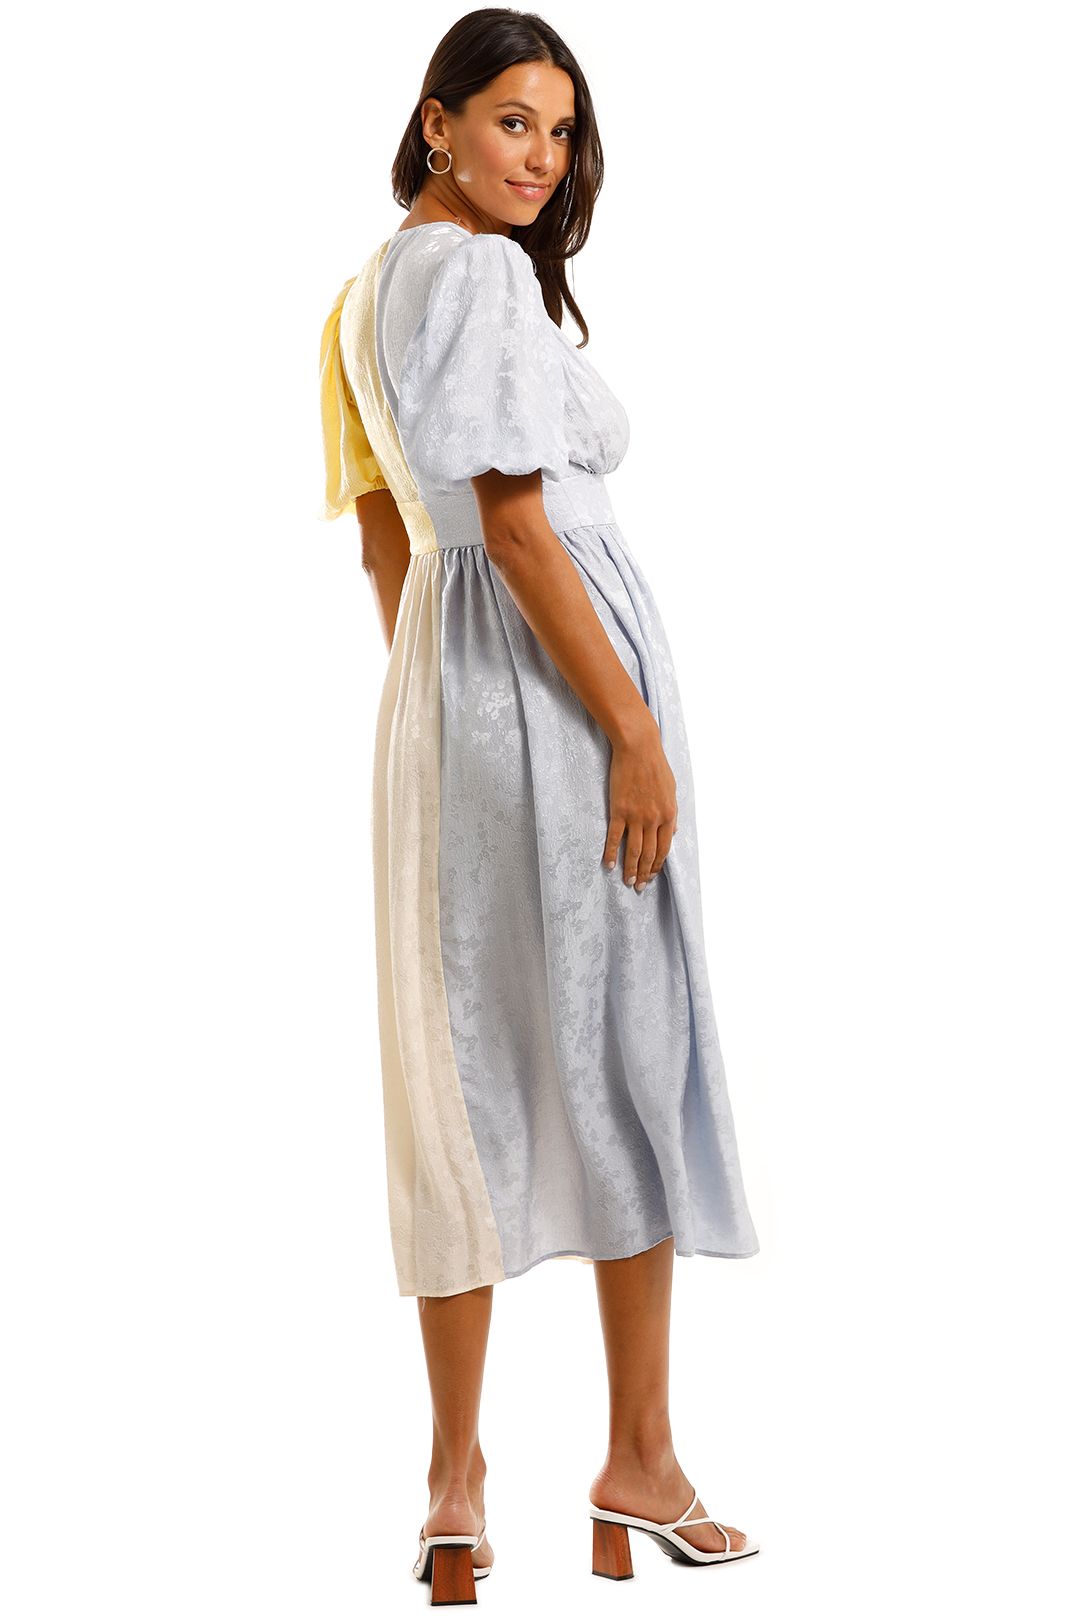 Stine Goya Isaia Short Sleeve Dress Midi Pastel